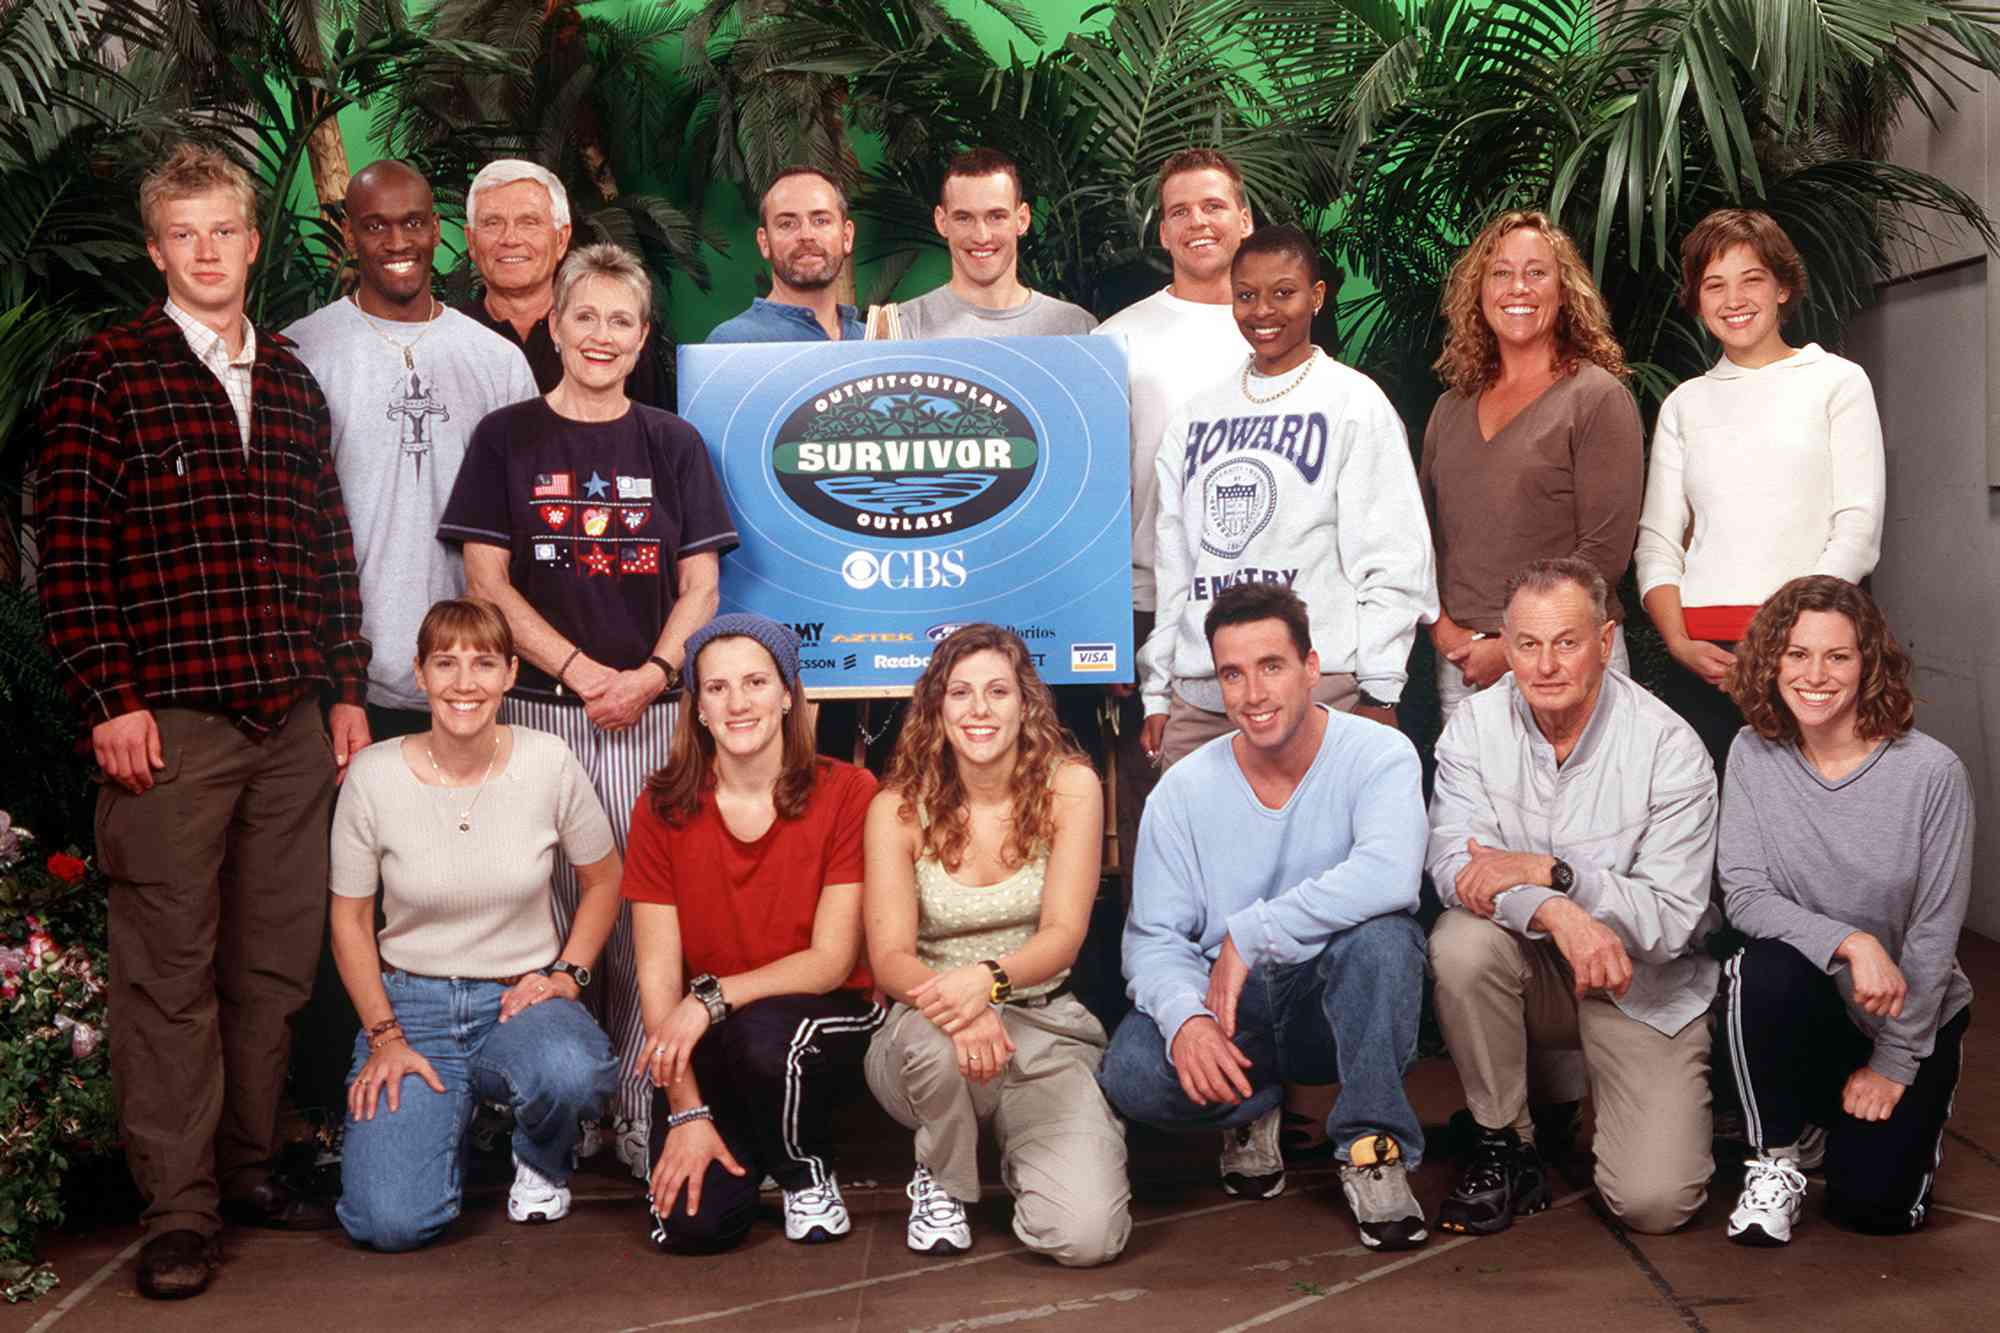 Survivor Season 1 Cast, Gretchen Cordy, Kelly wiglesworth, Jenna Lewis, Sean Kenniff, Rudy Boesch and Stacey Stillman. Back row, from left: Greg, Gervase, B.B., Sonja, Richard, Dirk, Joel, Ramona, Susan and Colleen.